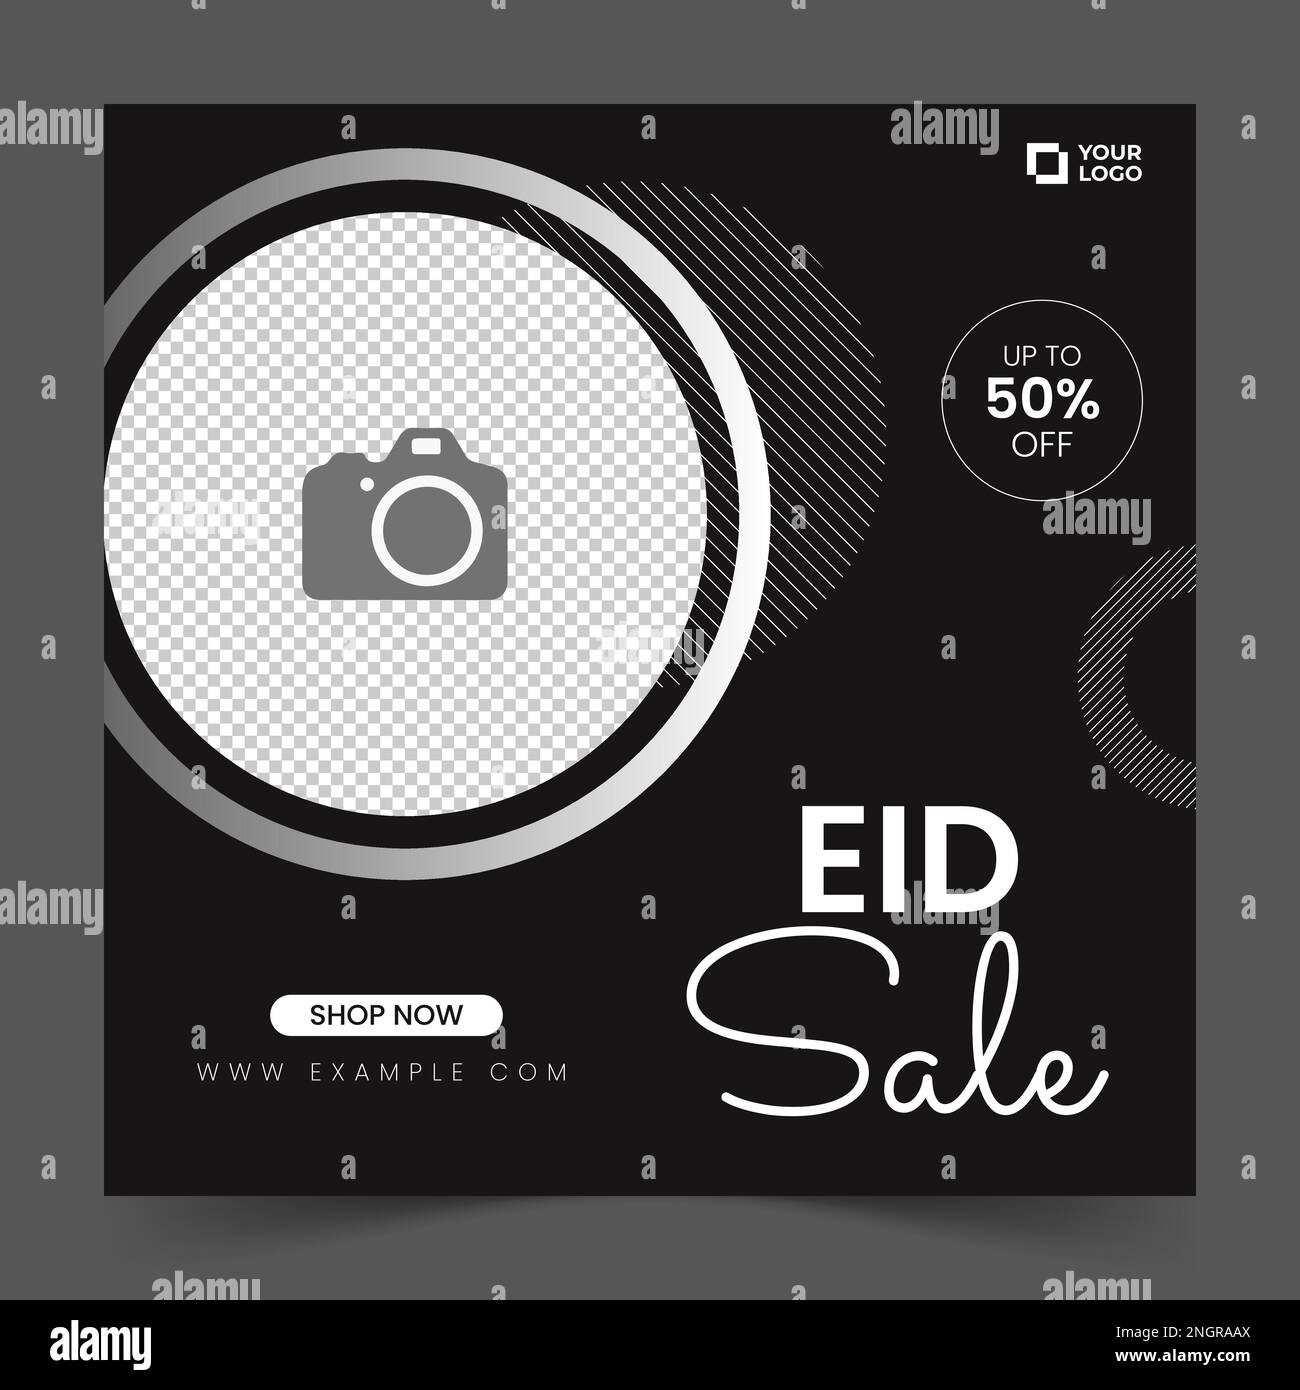 Eid sale social media post template design. For social media posts, Instagram, and web internet ads. Eid offer banner Stock Vector